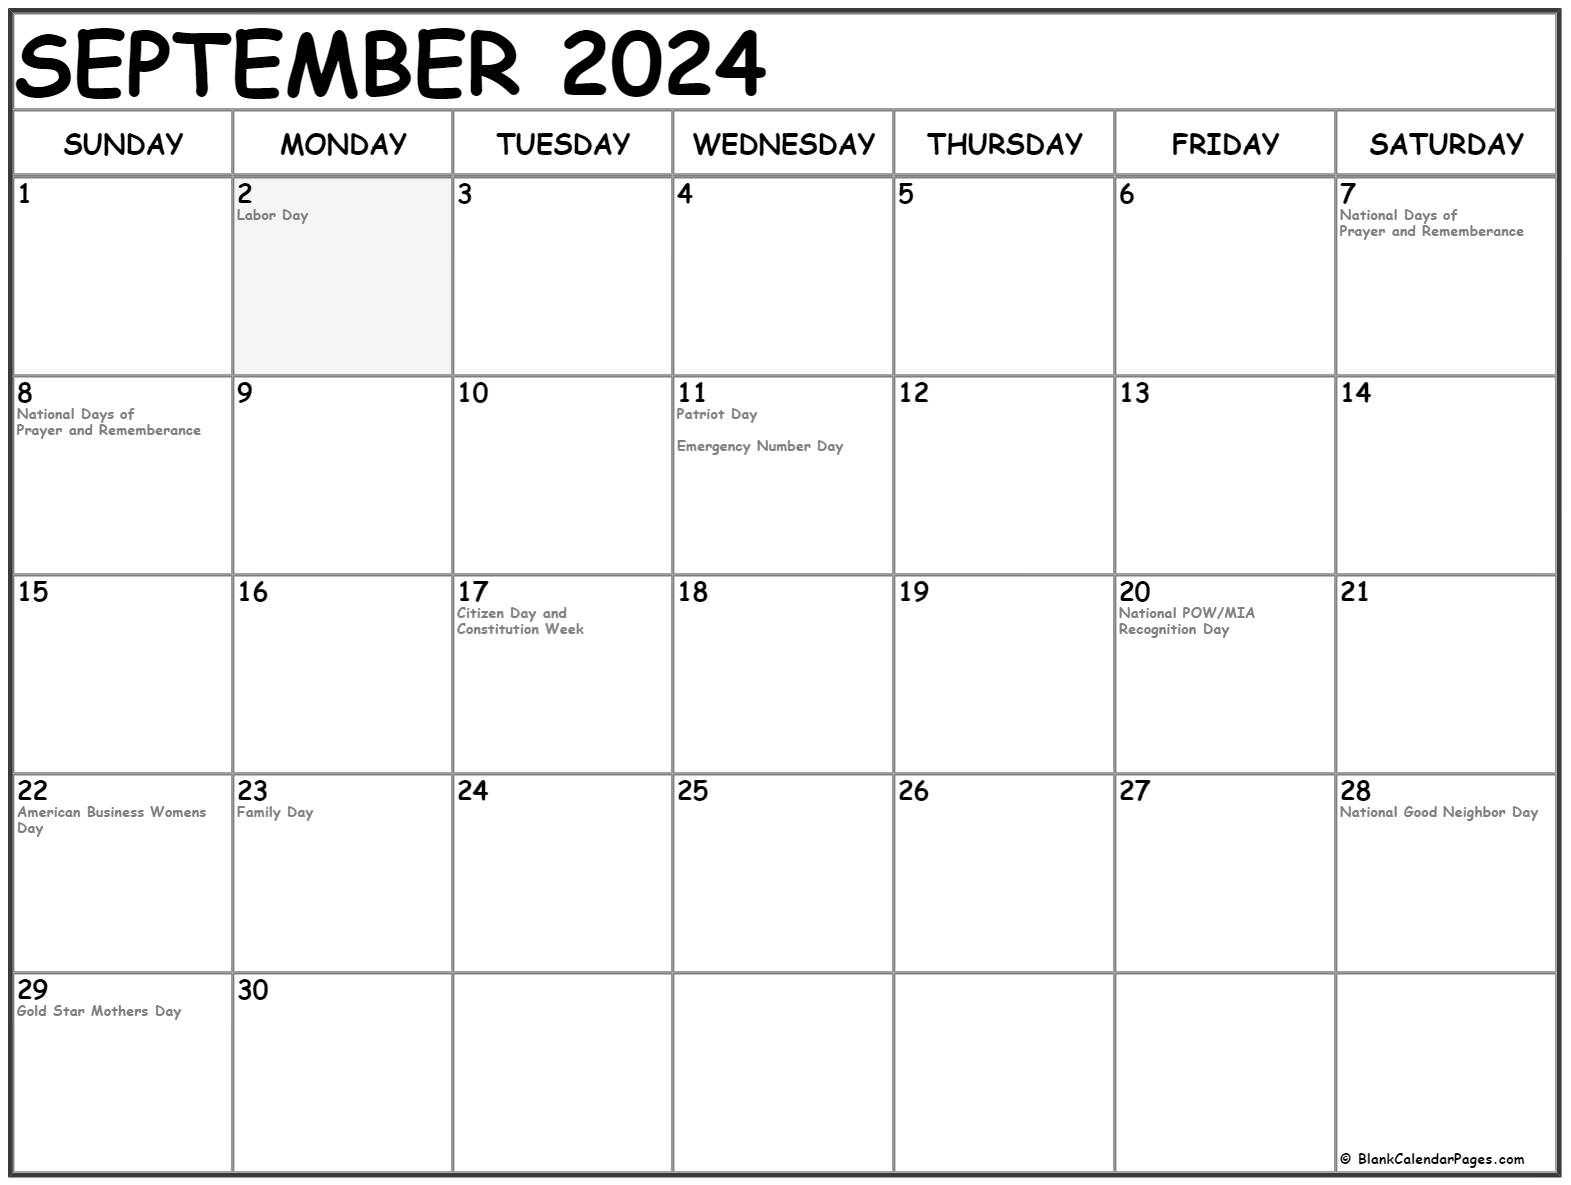 SCHWENKFELDER THANKSGIVING - September 24, 2024 - National Today